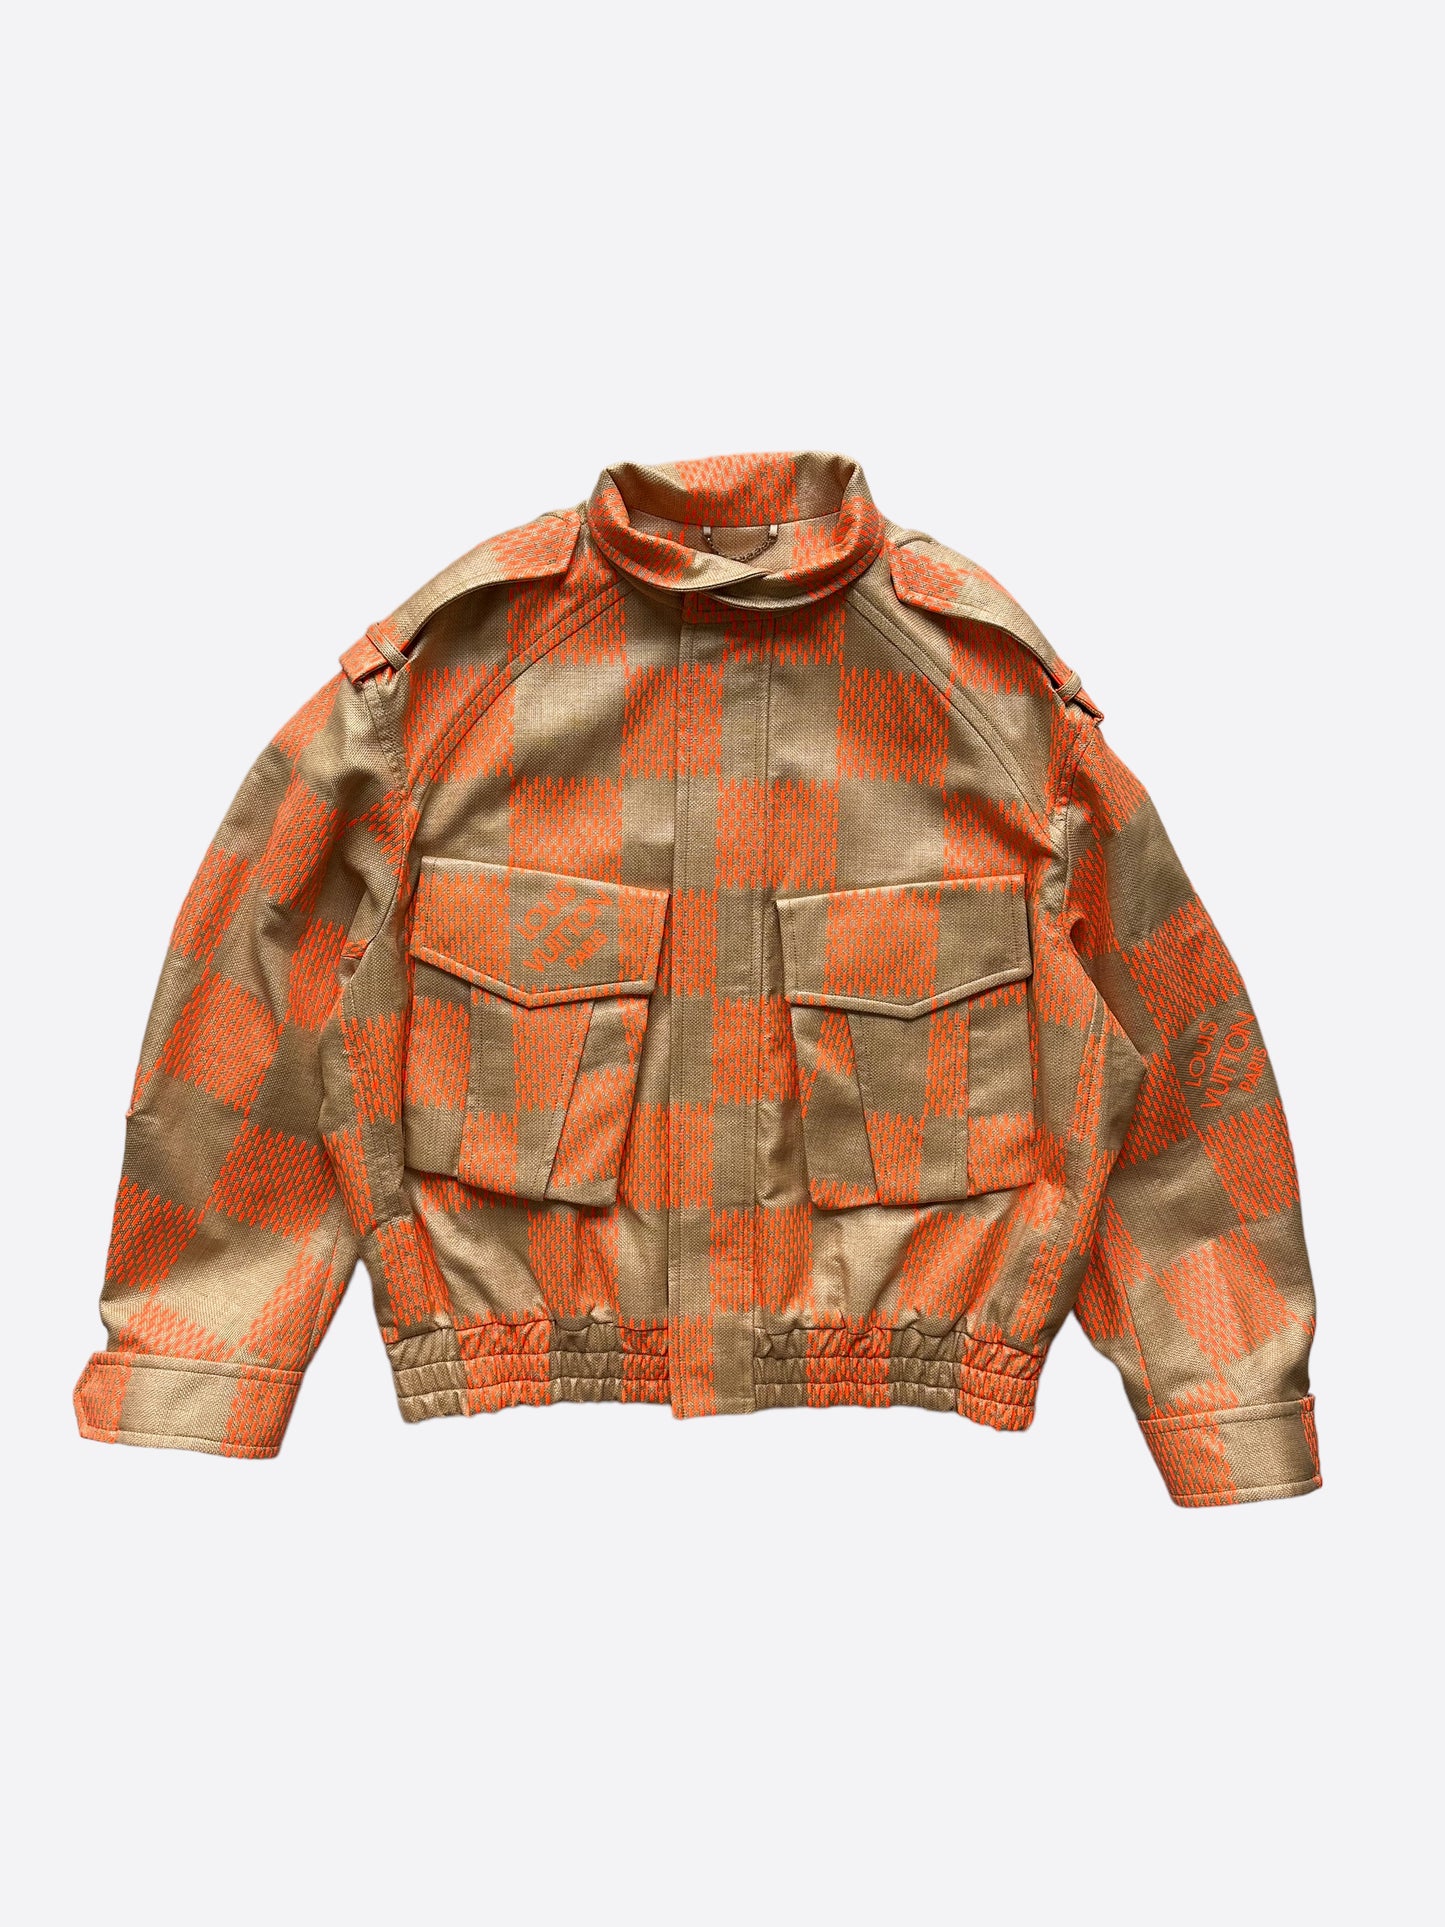 Louis Vuitton Orange Damier Checkered Jacket